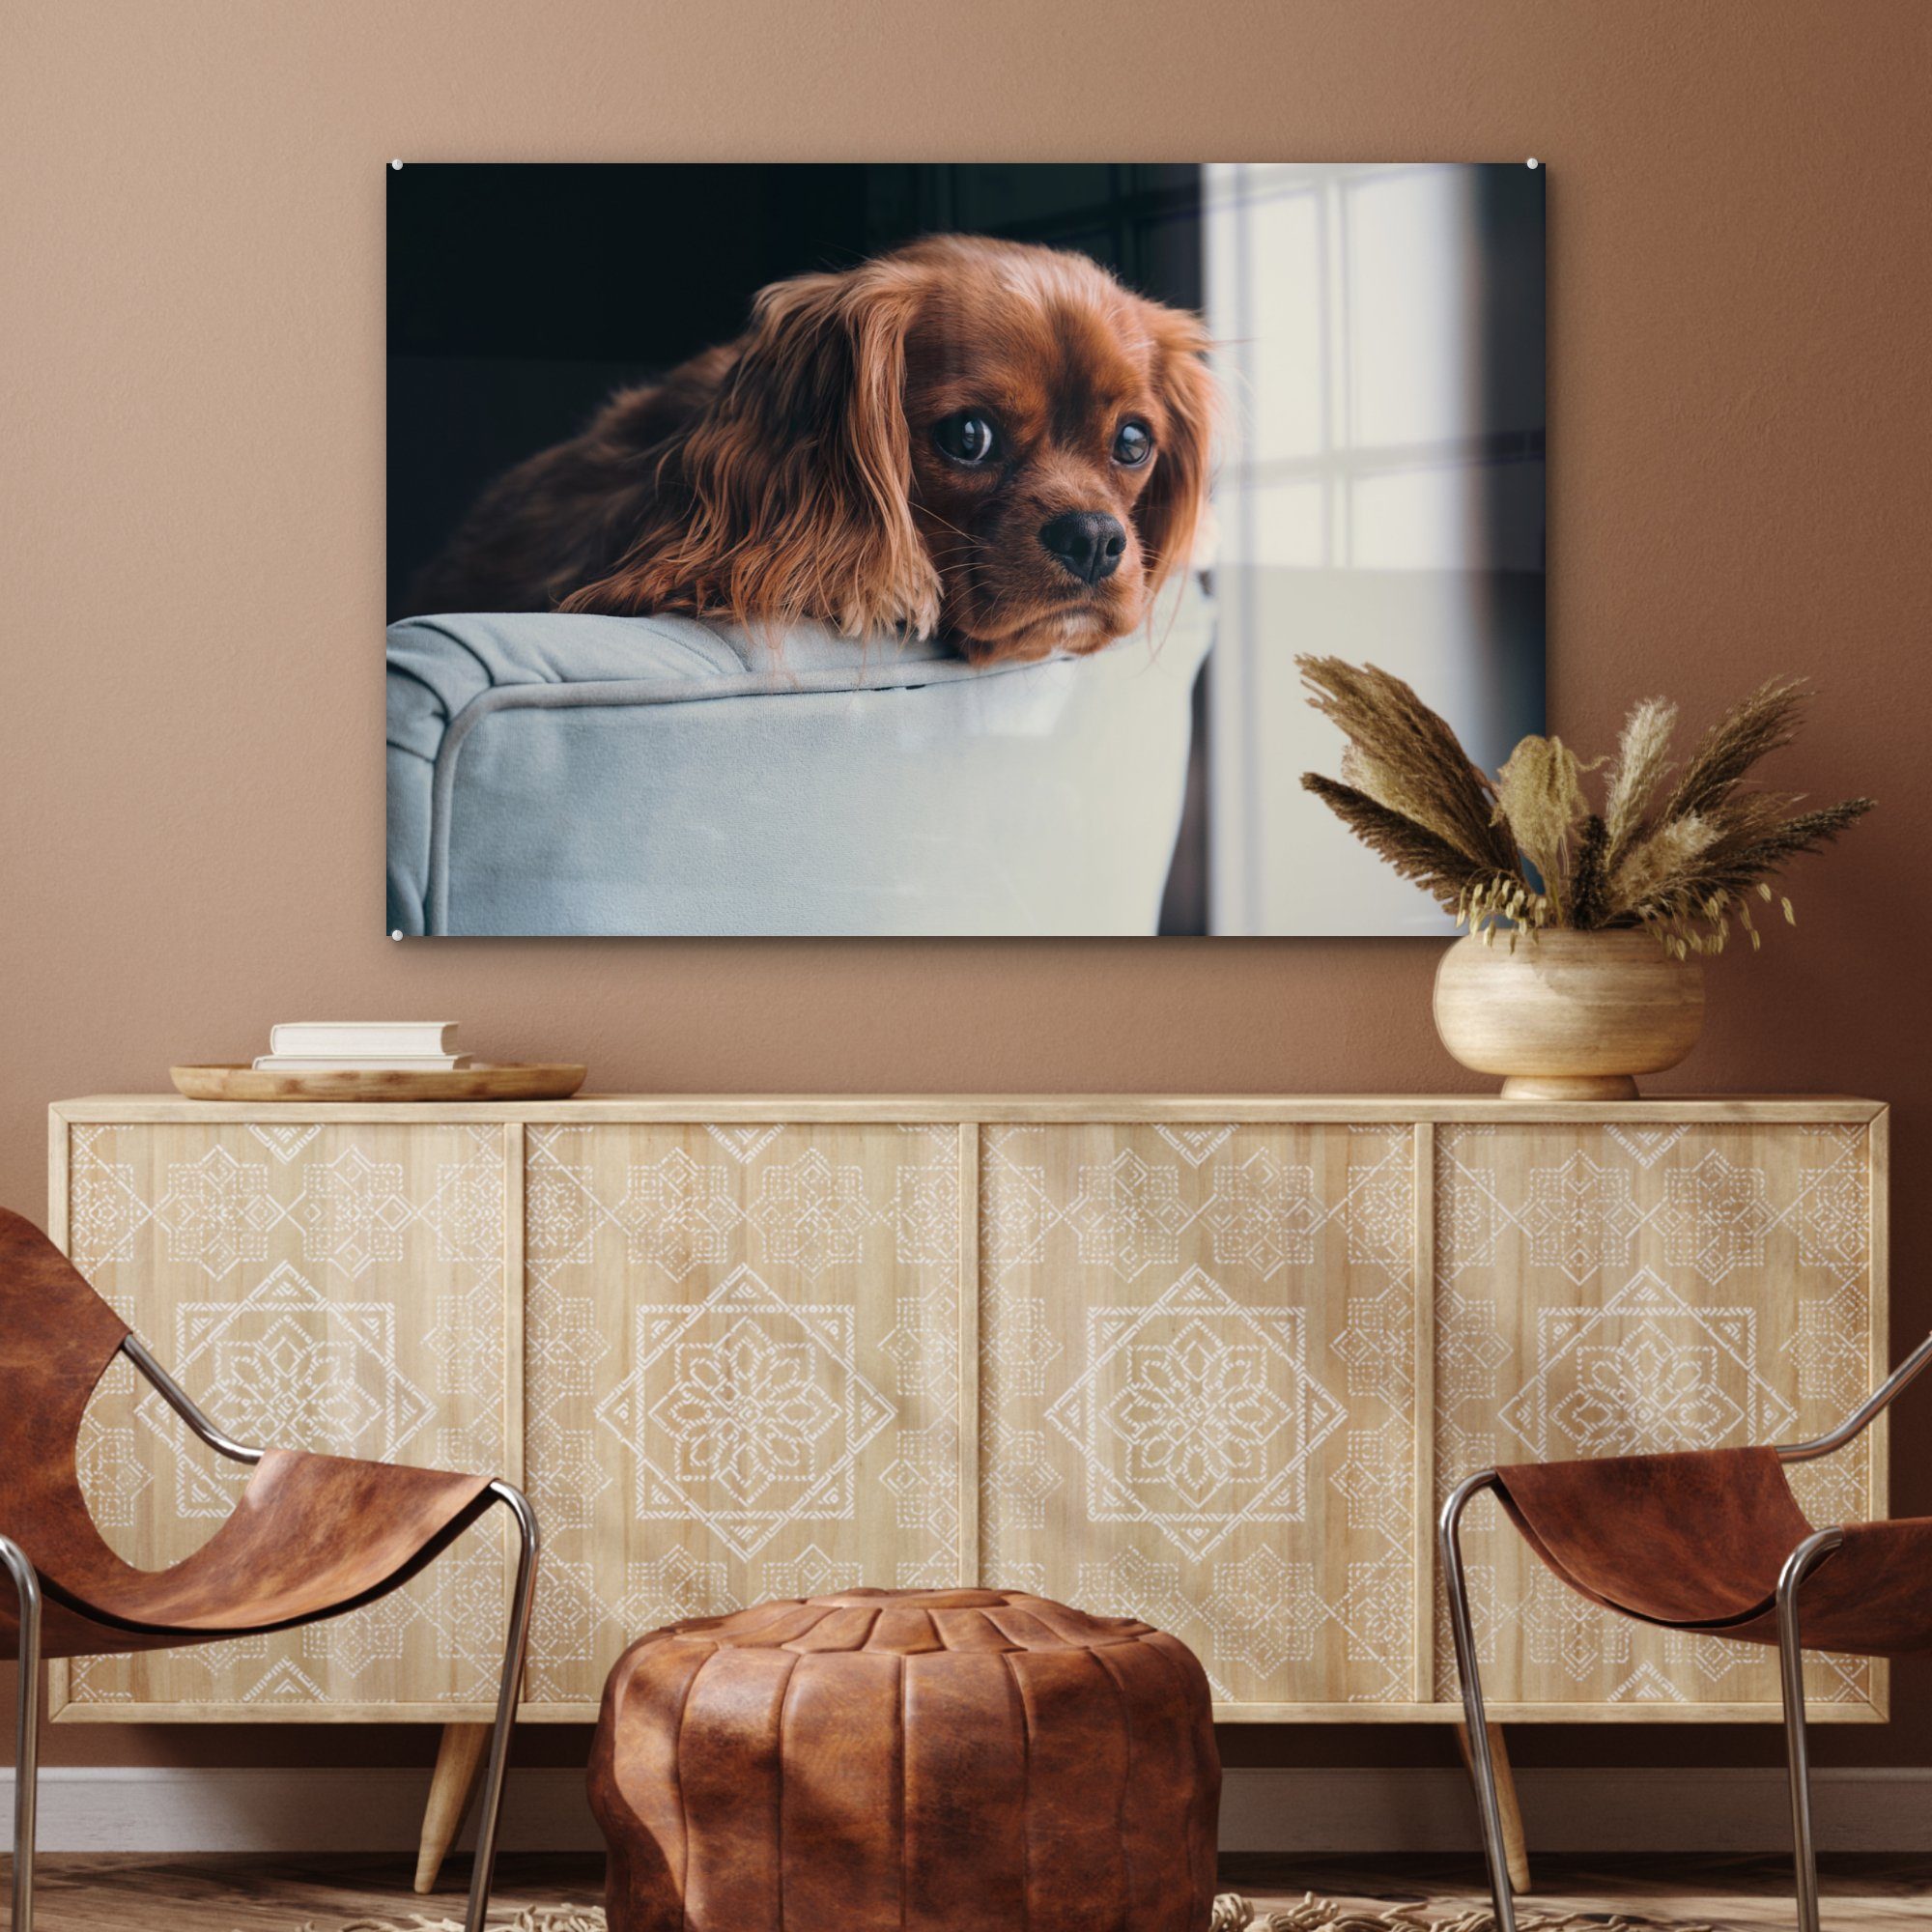 Kopf, Hund St), MuchoWow & - Acrylglasbild Wohnzimmer Schlafzimmer Stuhl (1 Acrylglasbilder -